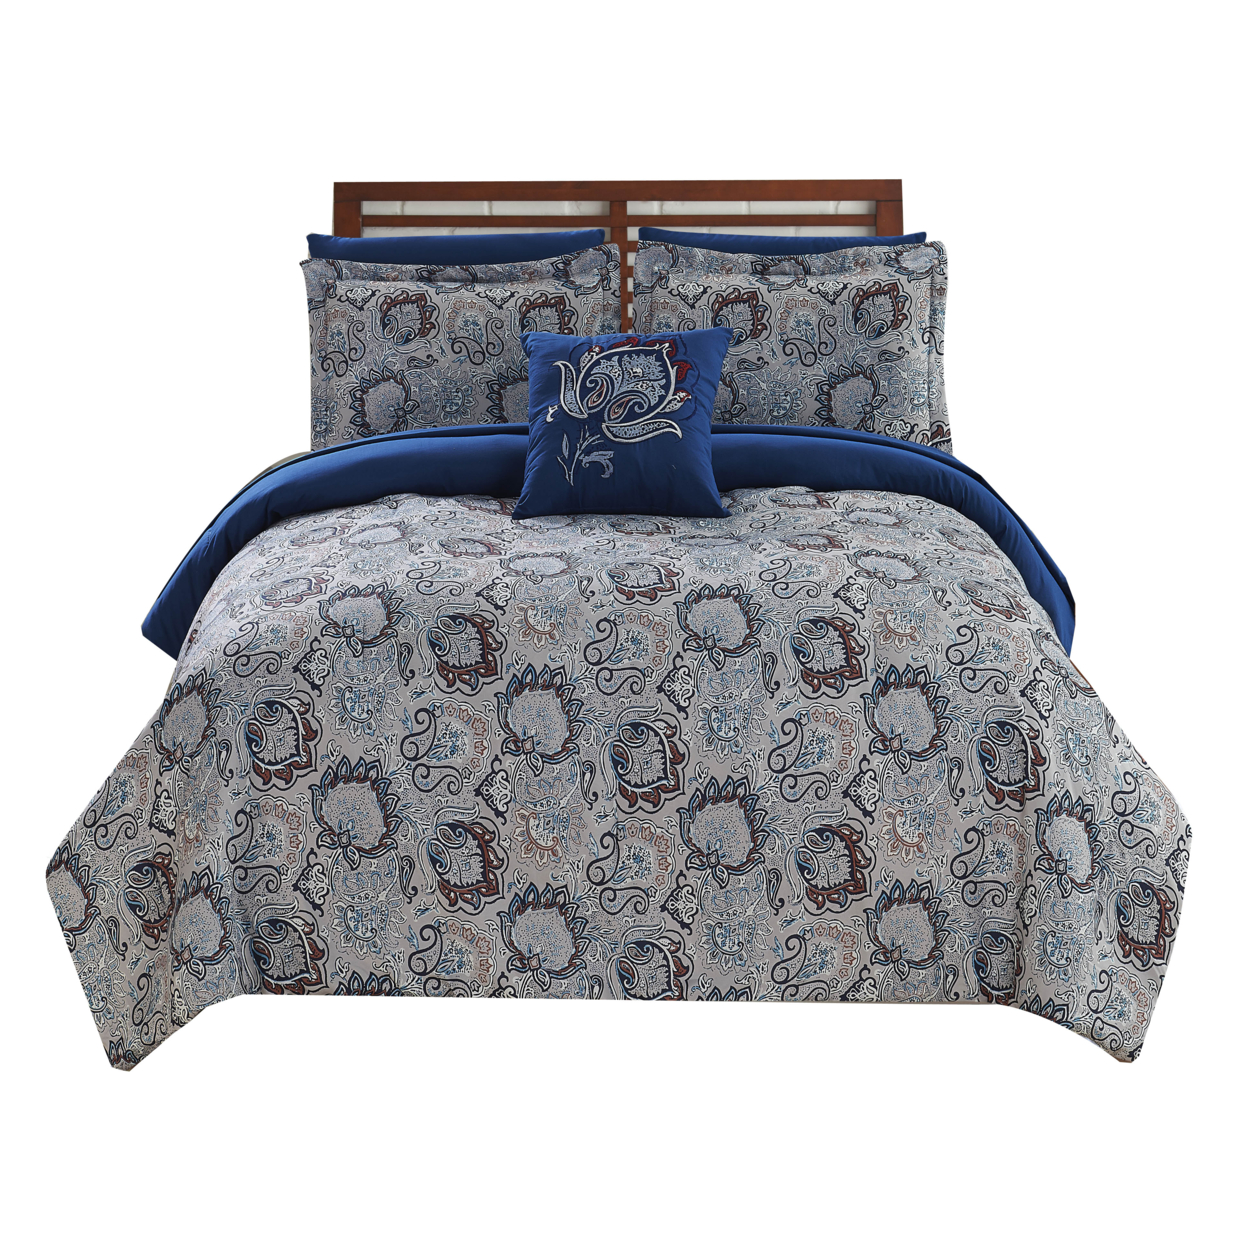 Caen 8 Piece Printed Queen Reversible Comforter Set The Urban Port, Gray And Blue- Saltoro Sherpi